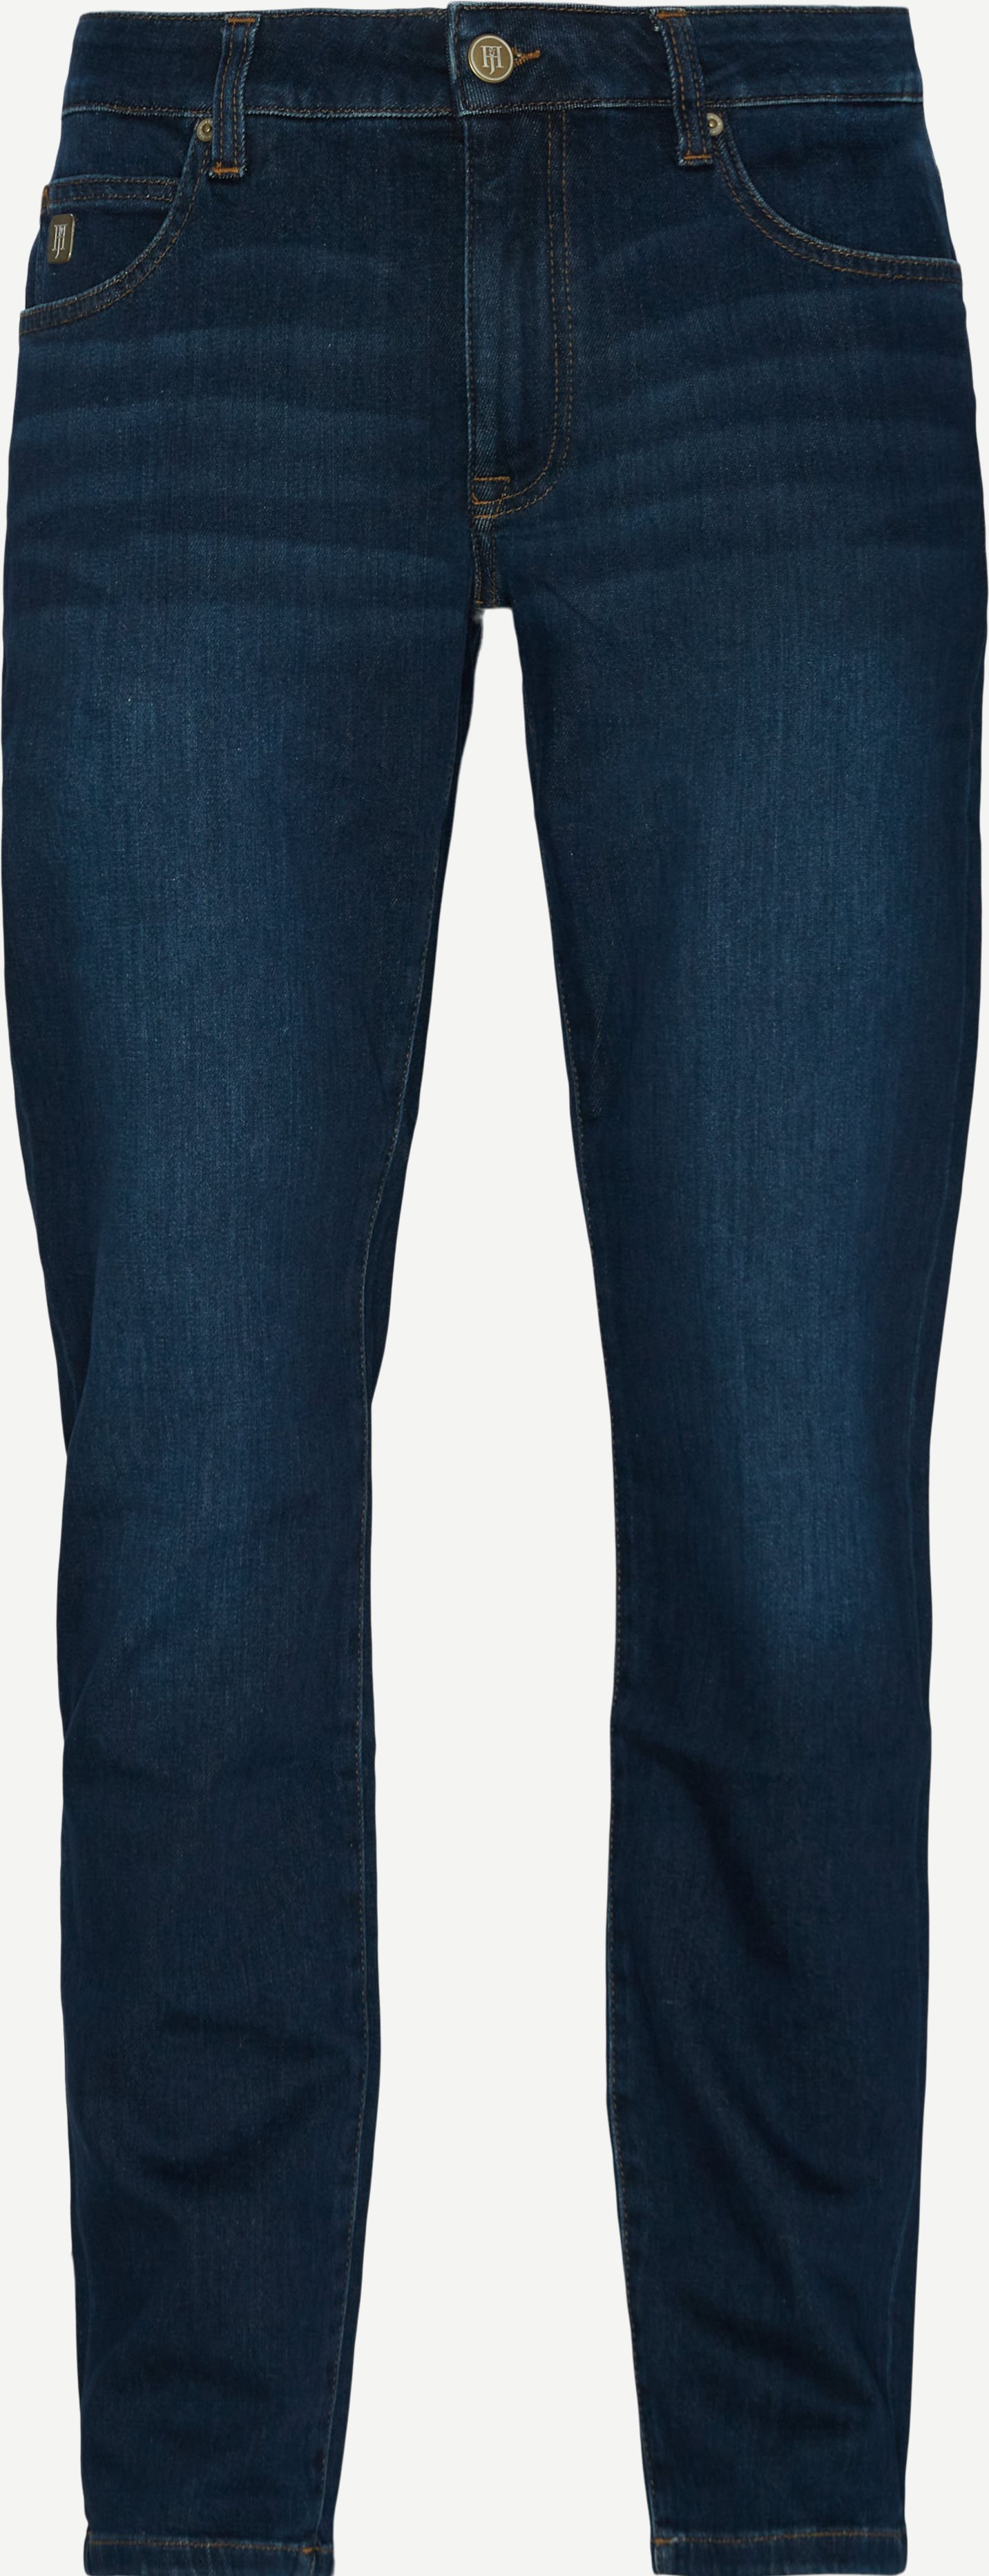 06529 Cape Town Silk Touch Jeans - Jeans - Slim fit - Denim